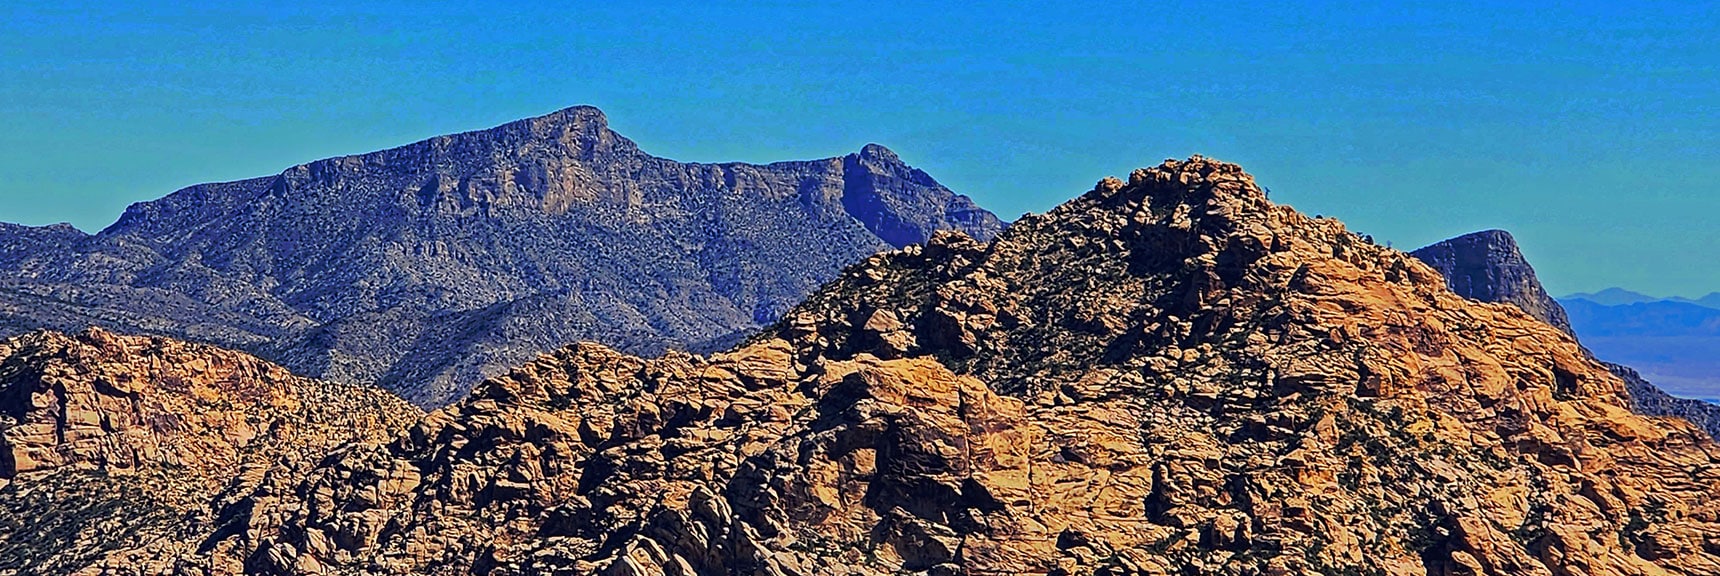 Damsel Peak (left); Turtlehead Peak (right) Behind White Rock Mountain | Switchback Spring Ridge | Red Rock Canyon, Nevada